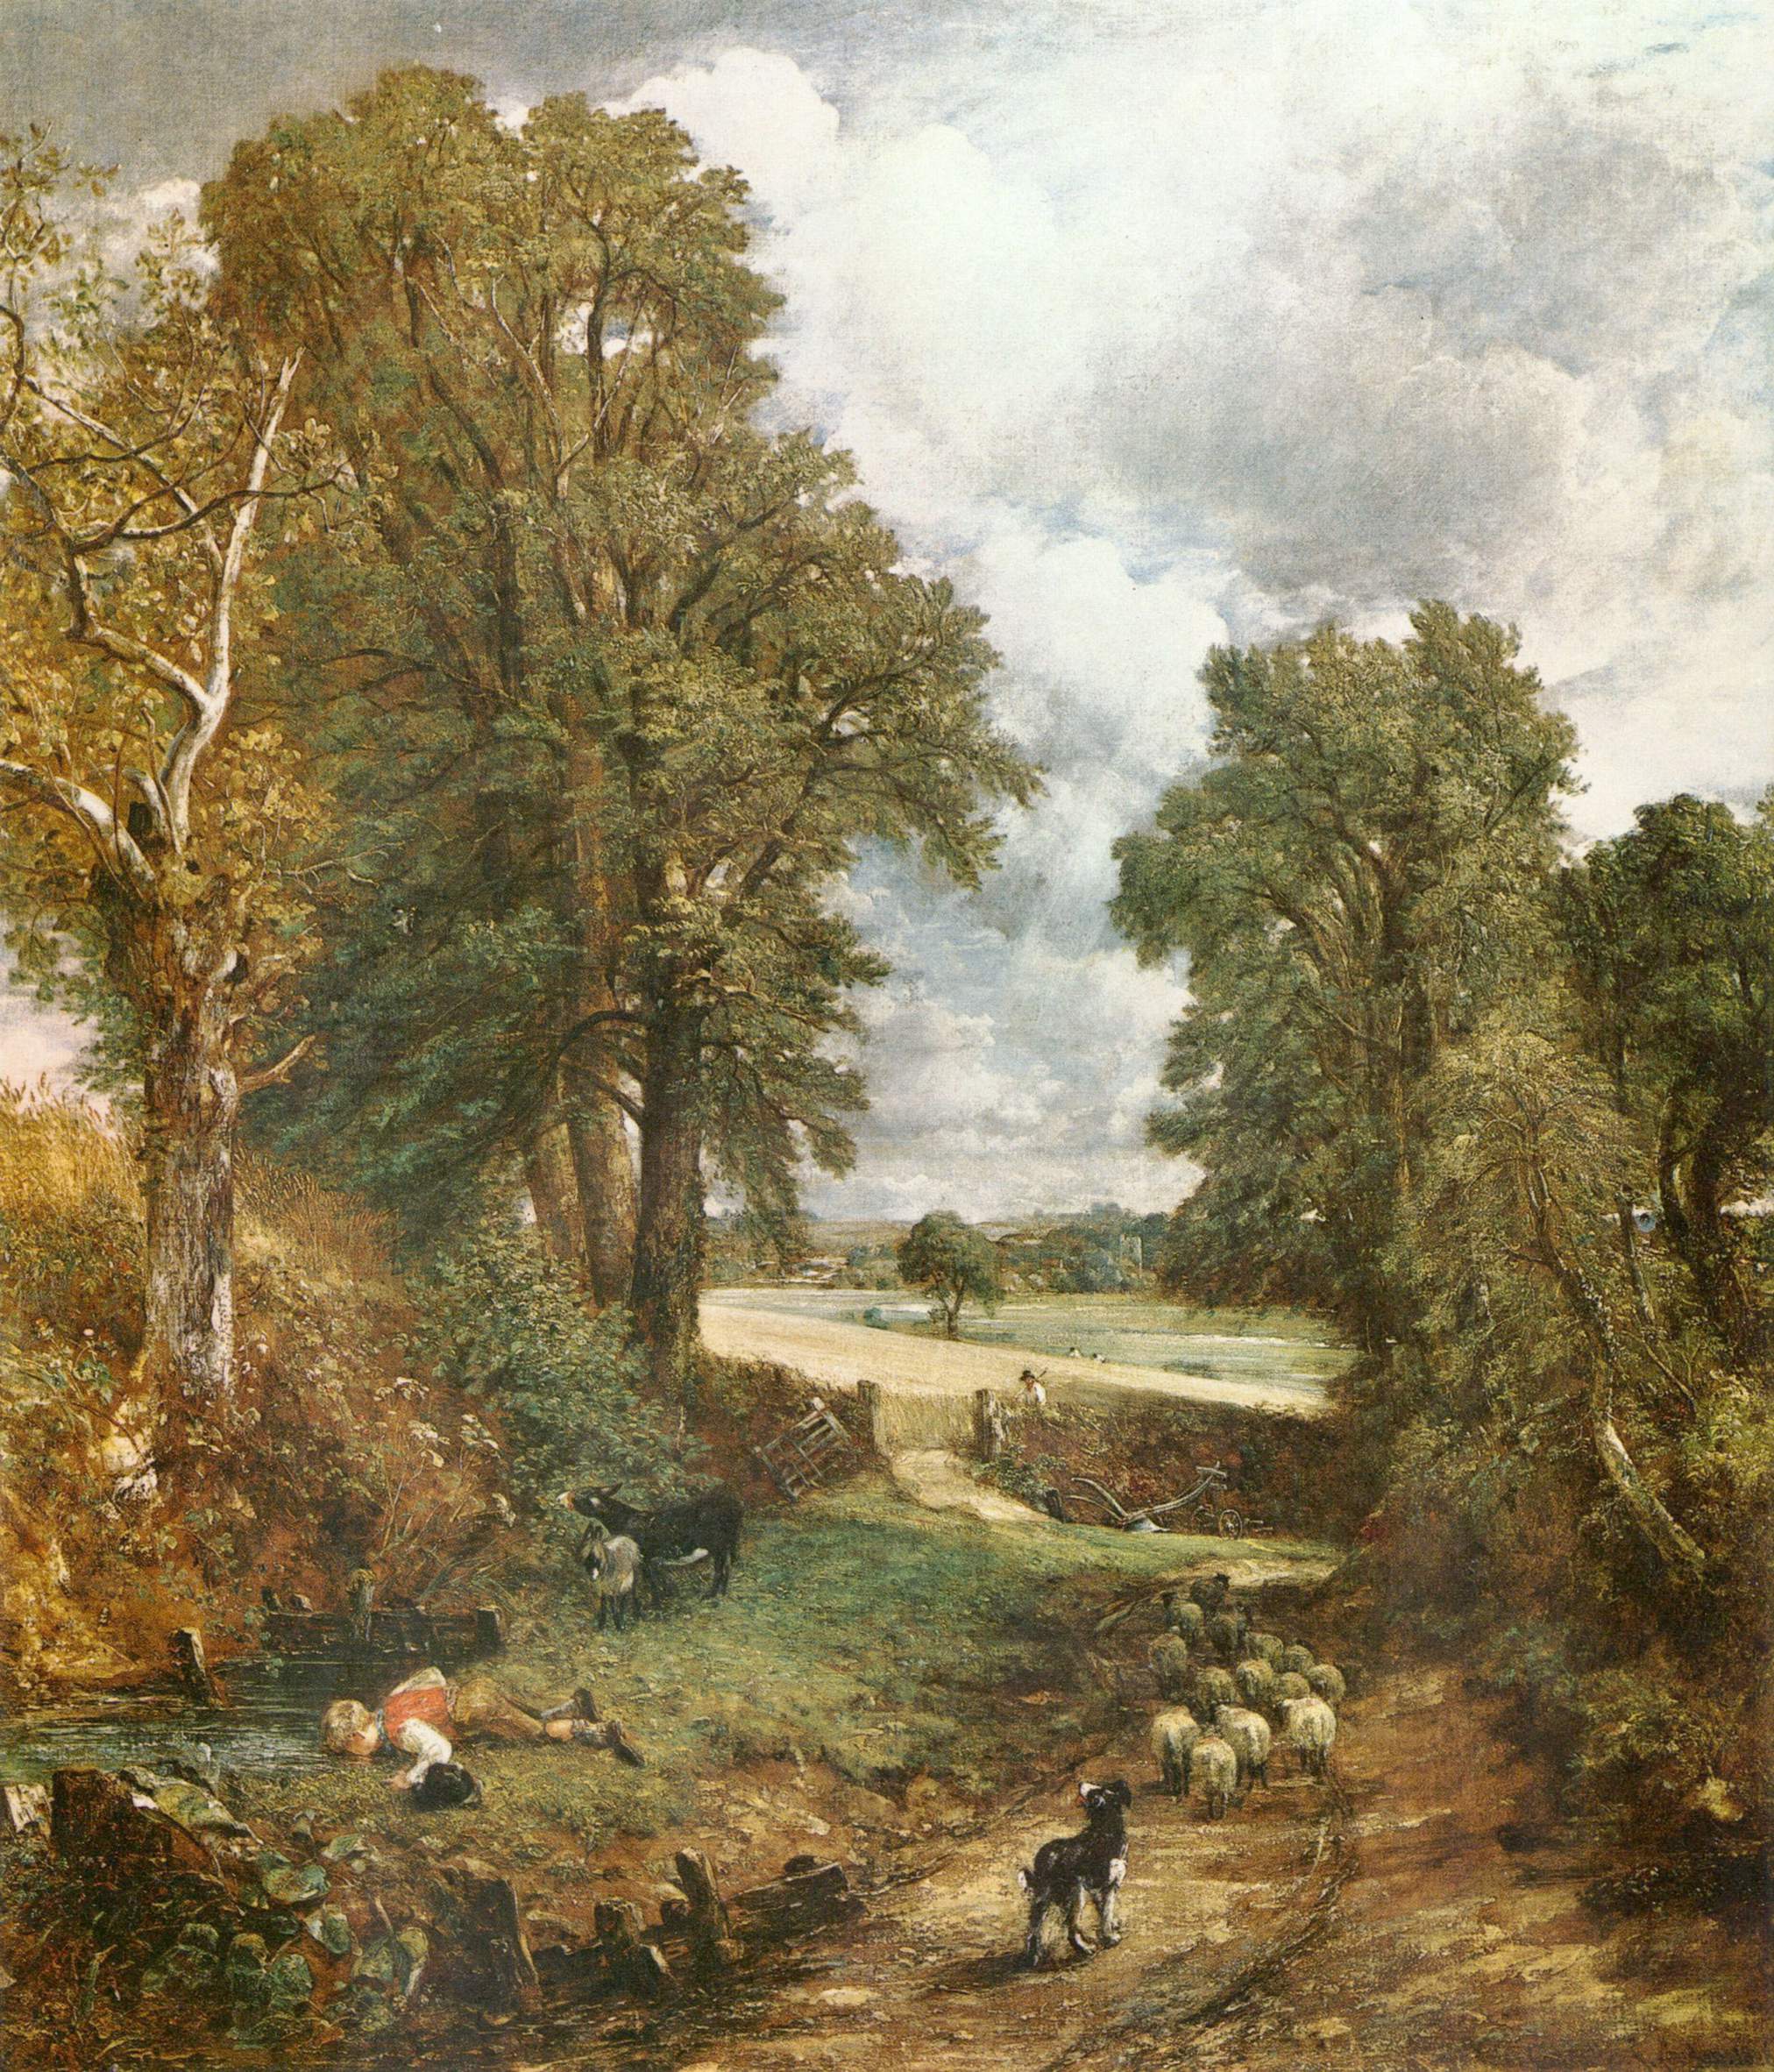 O Milheiral by John Constable - 1826 - 1.43 m x 1.22 m 